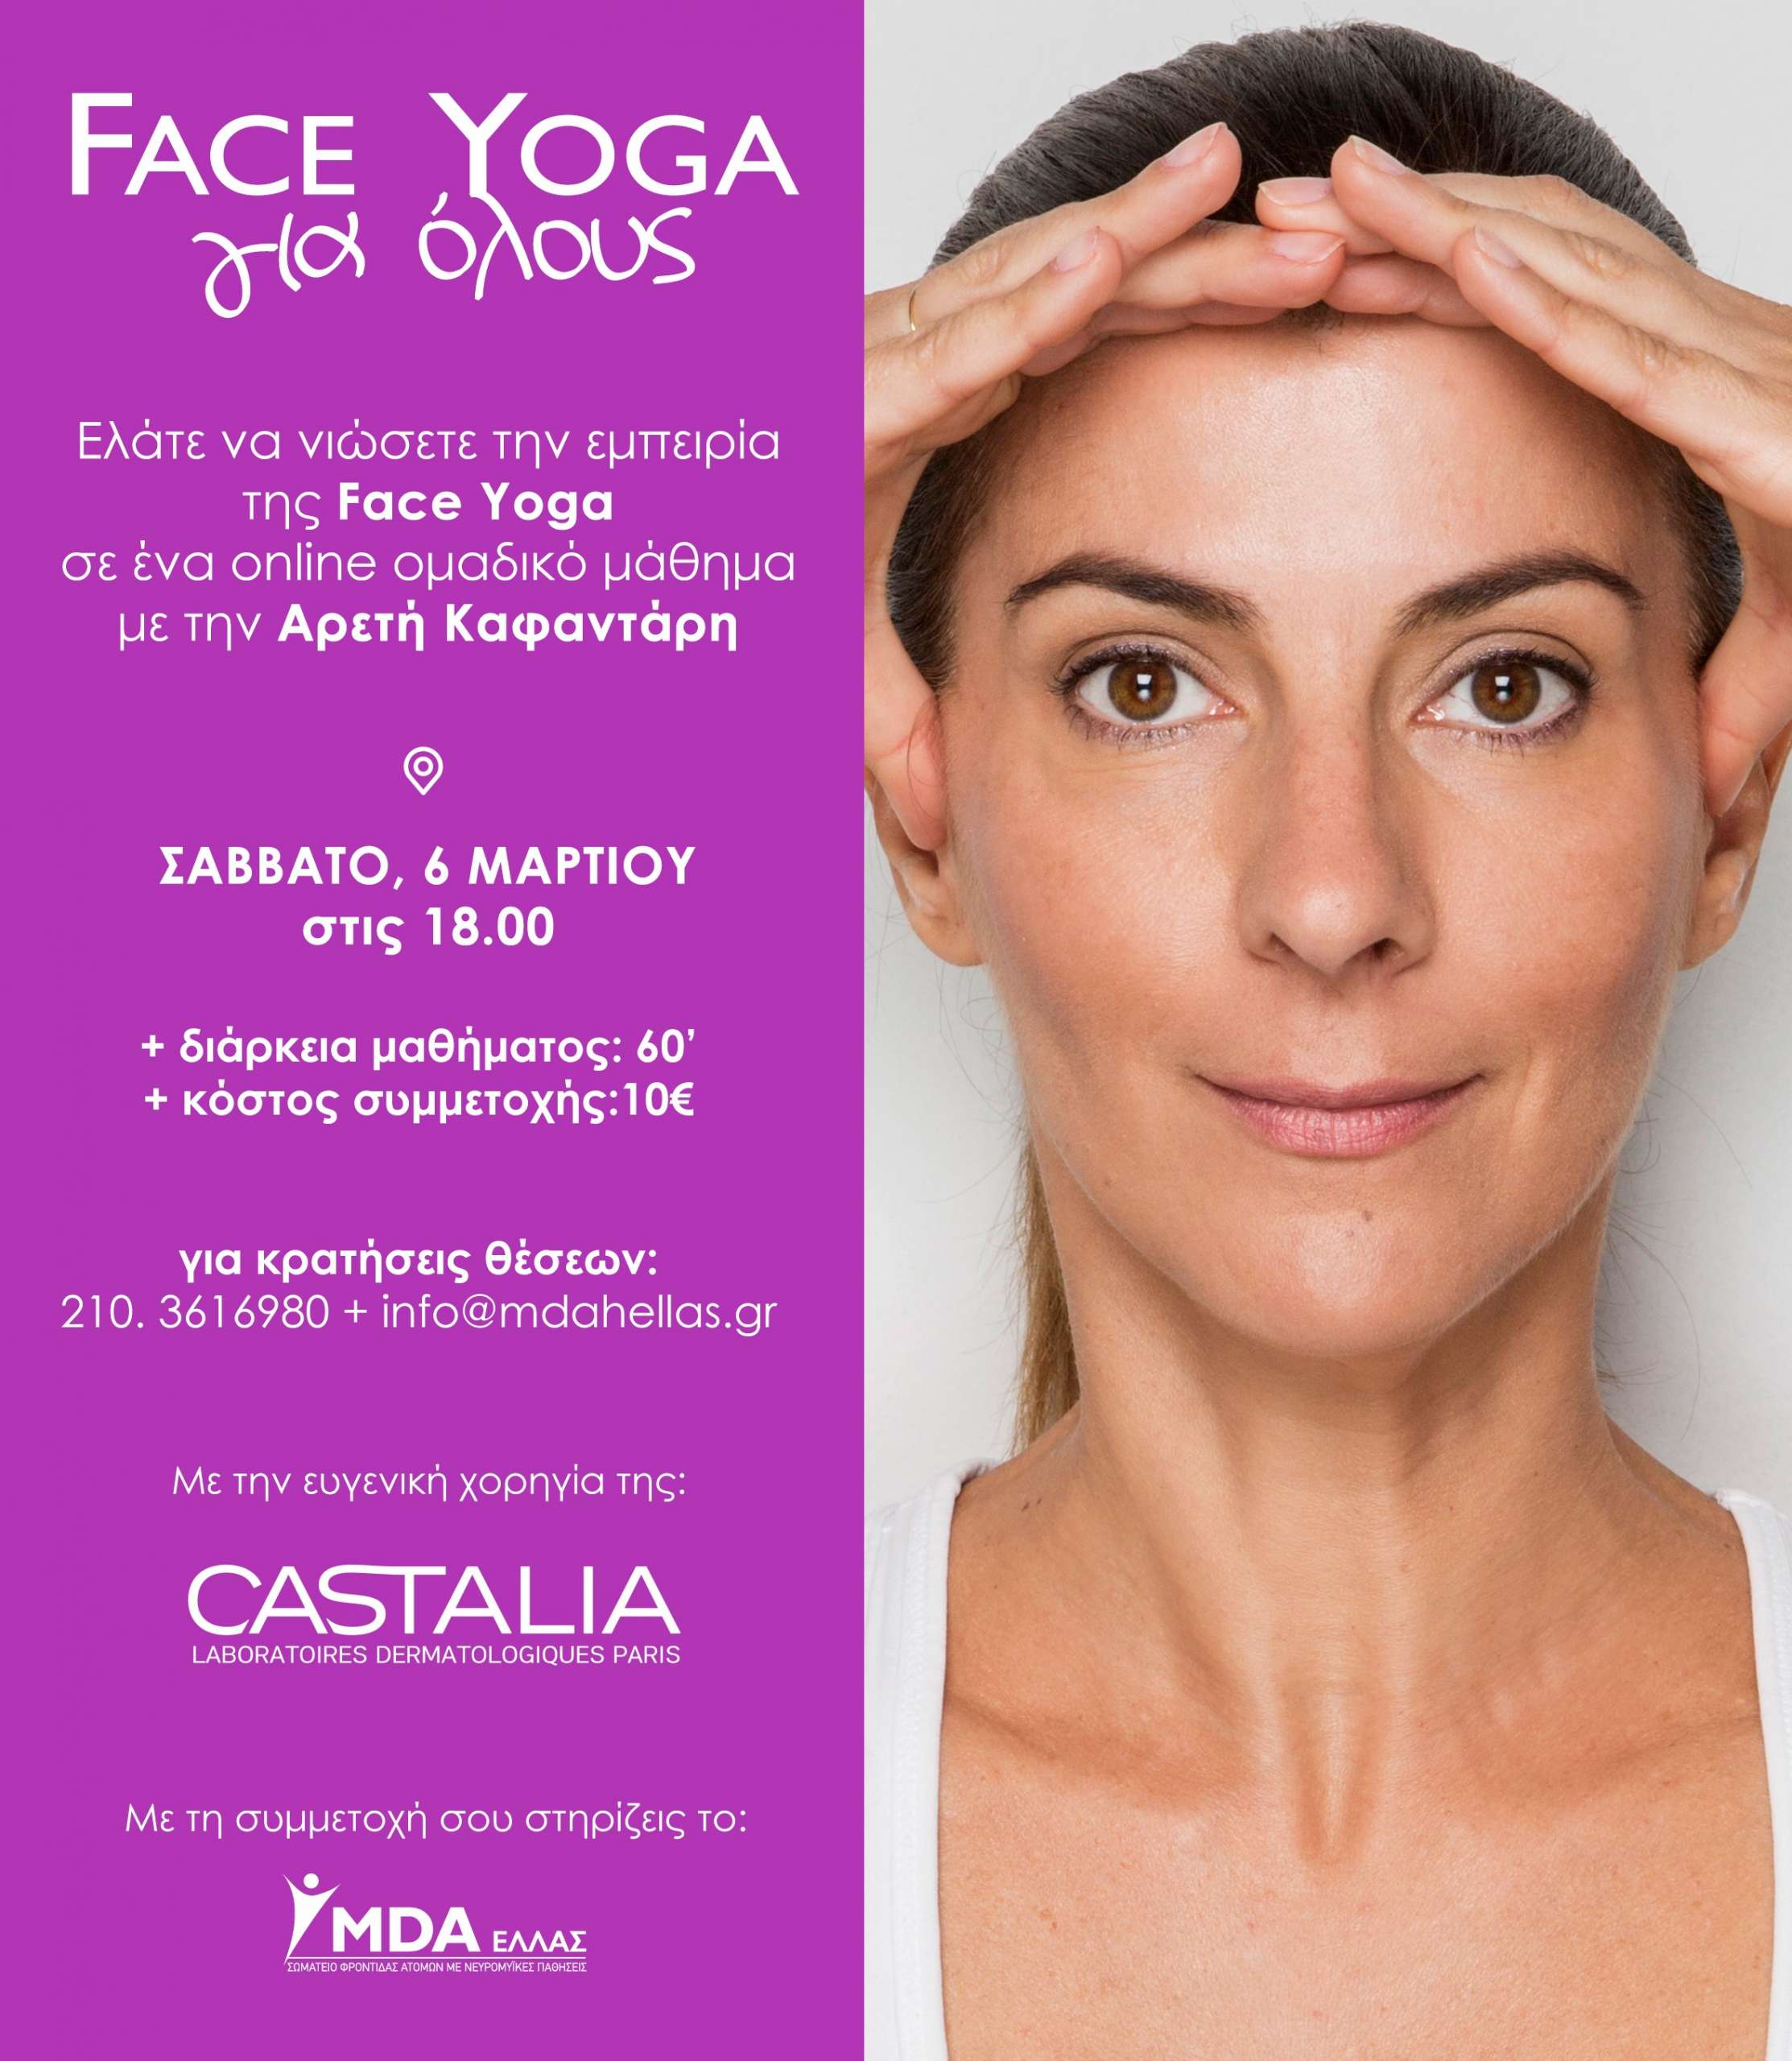 H CASTALIA Υποστηρίζει το MDA Ελλάς που Διοργανώνει μια Ξεχωριστή Εμπειρία Face Yoga.